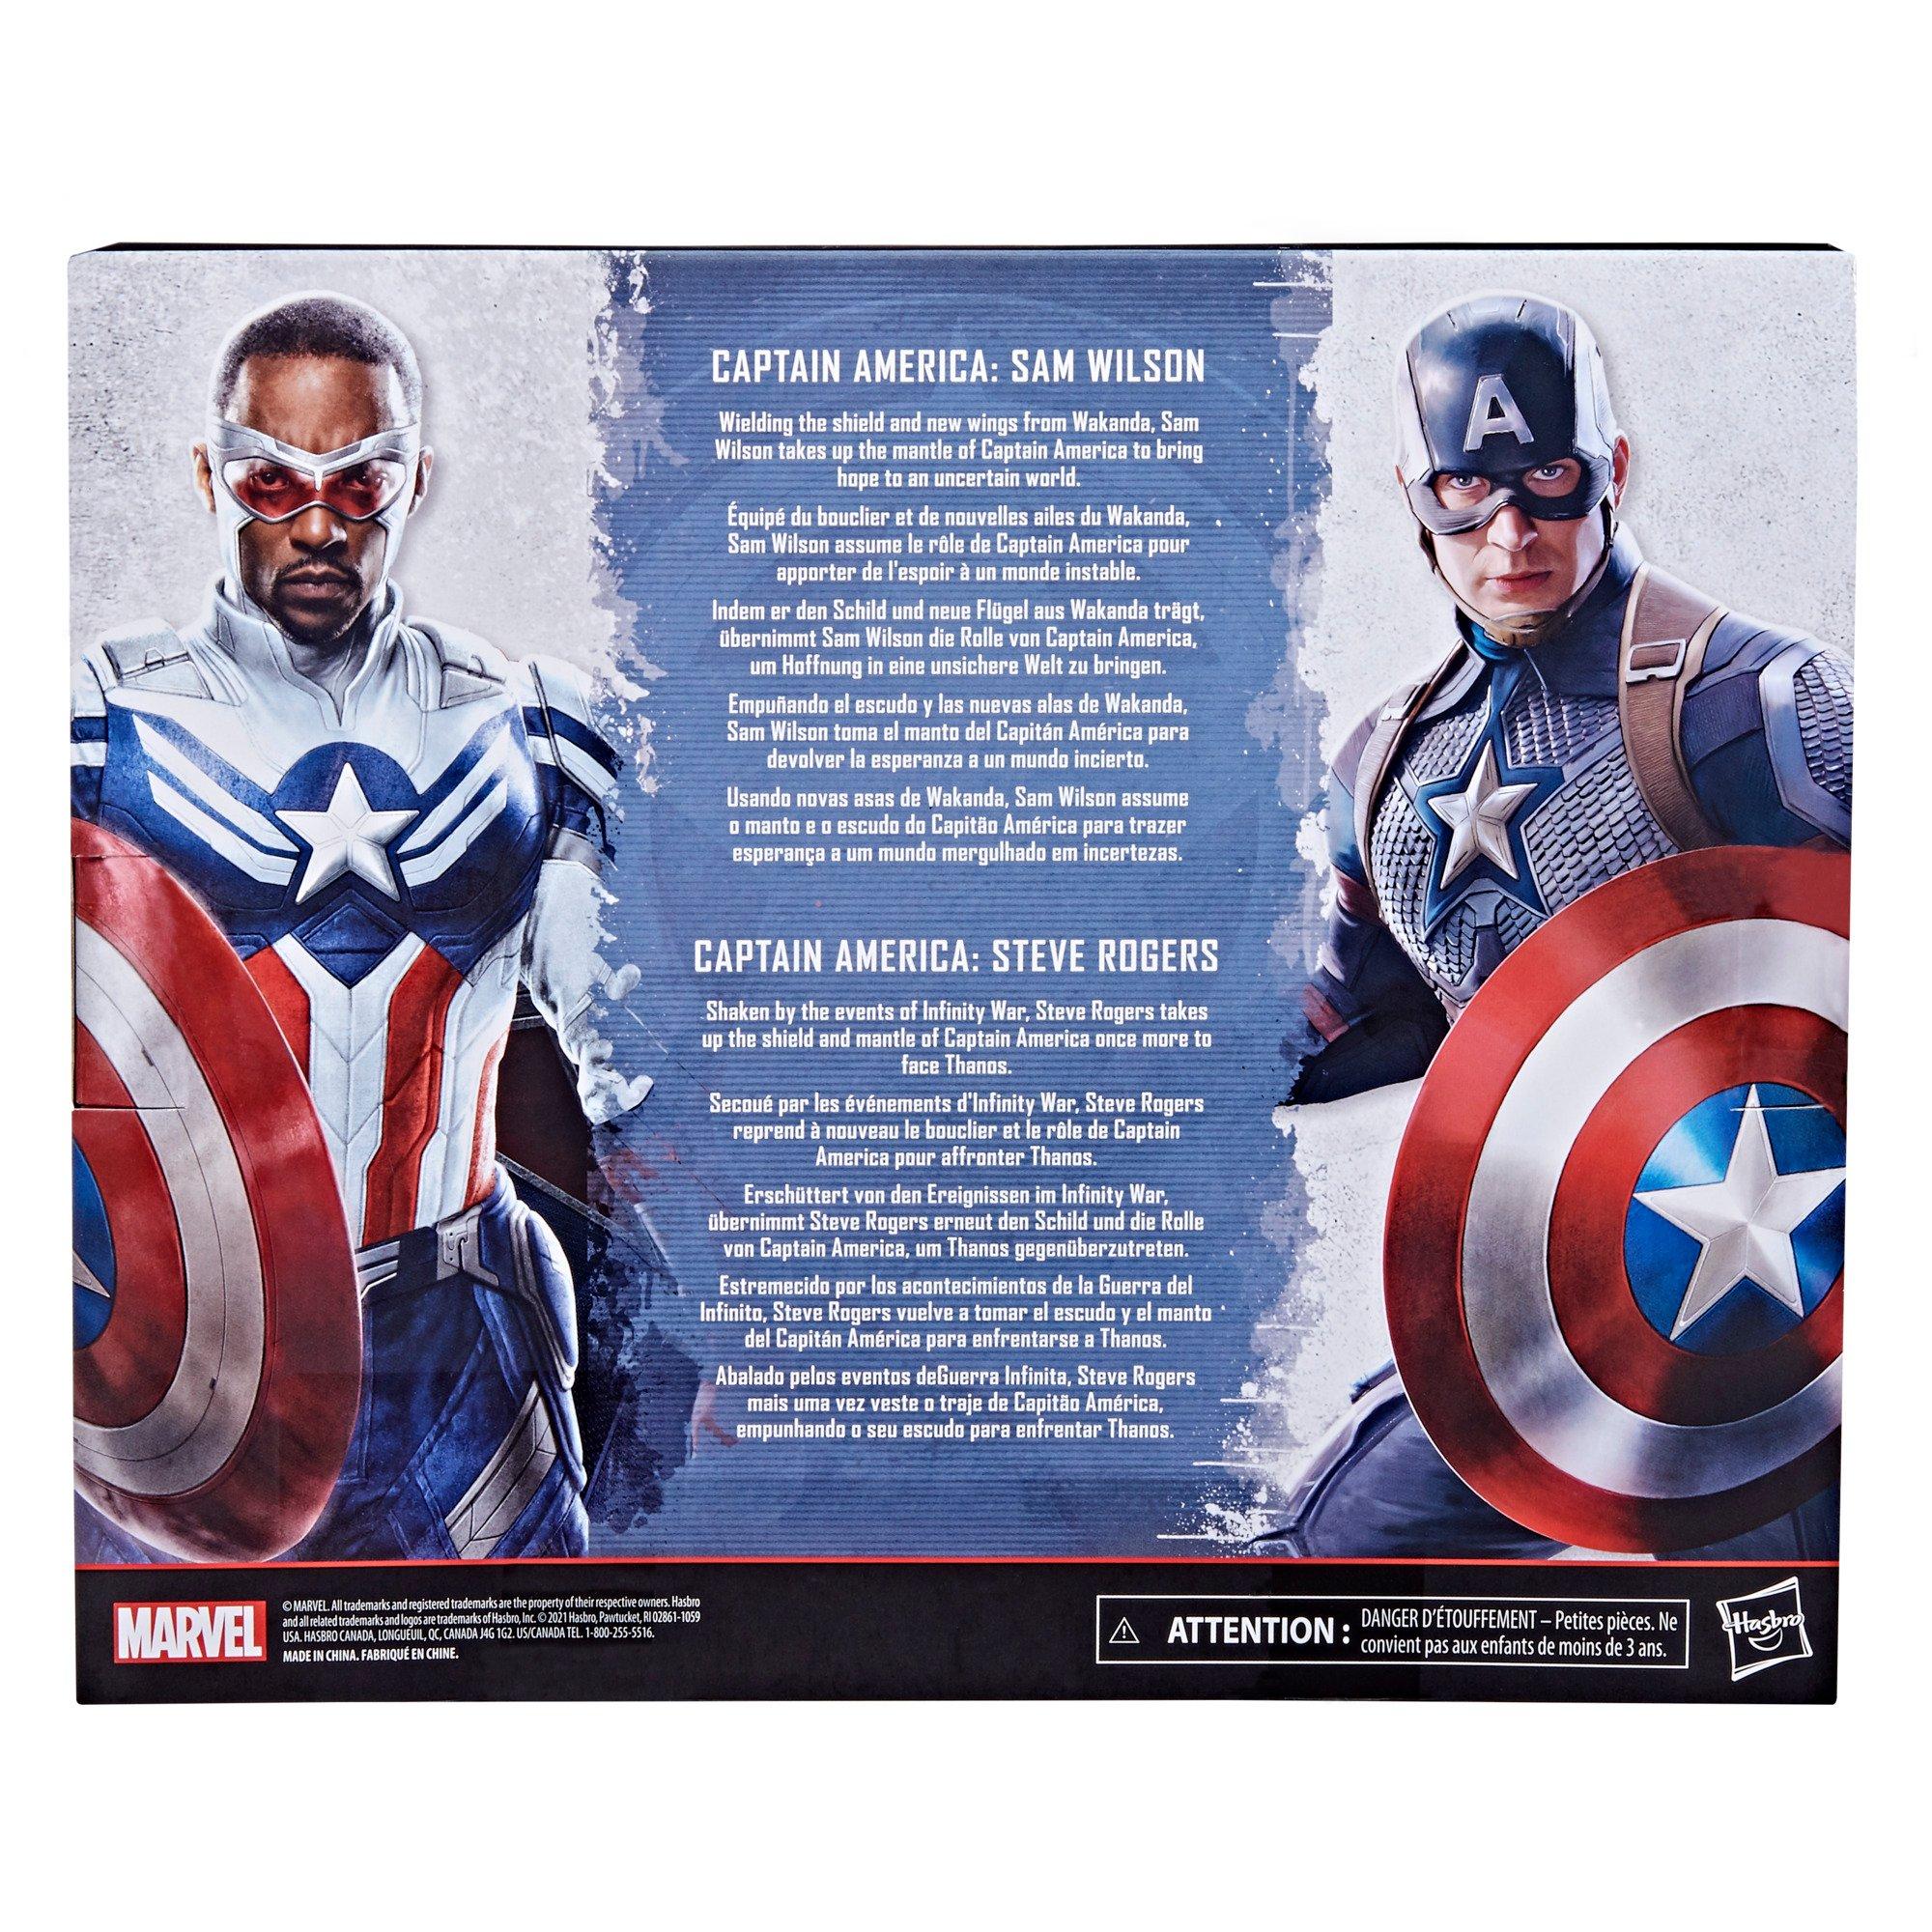 The Infinity Saga Marvel Legends - Figurine Captain America